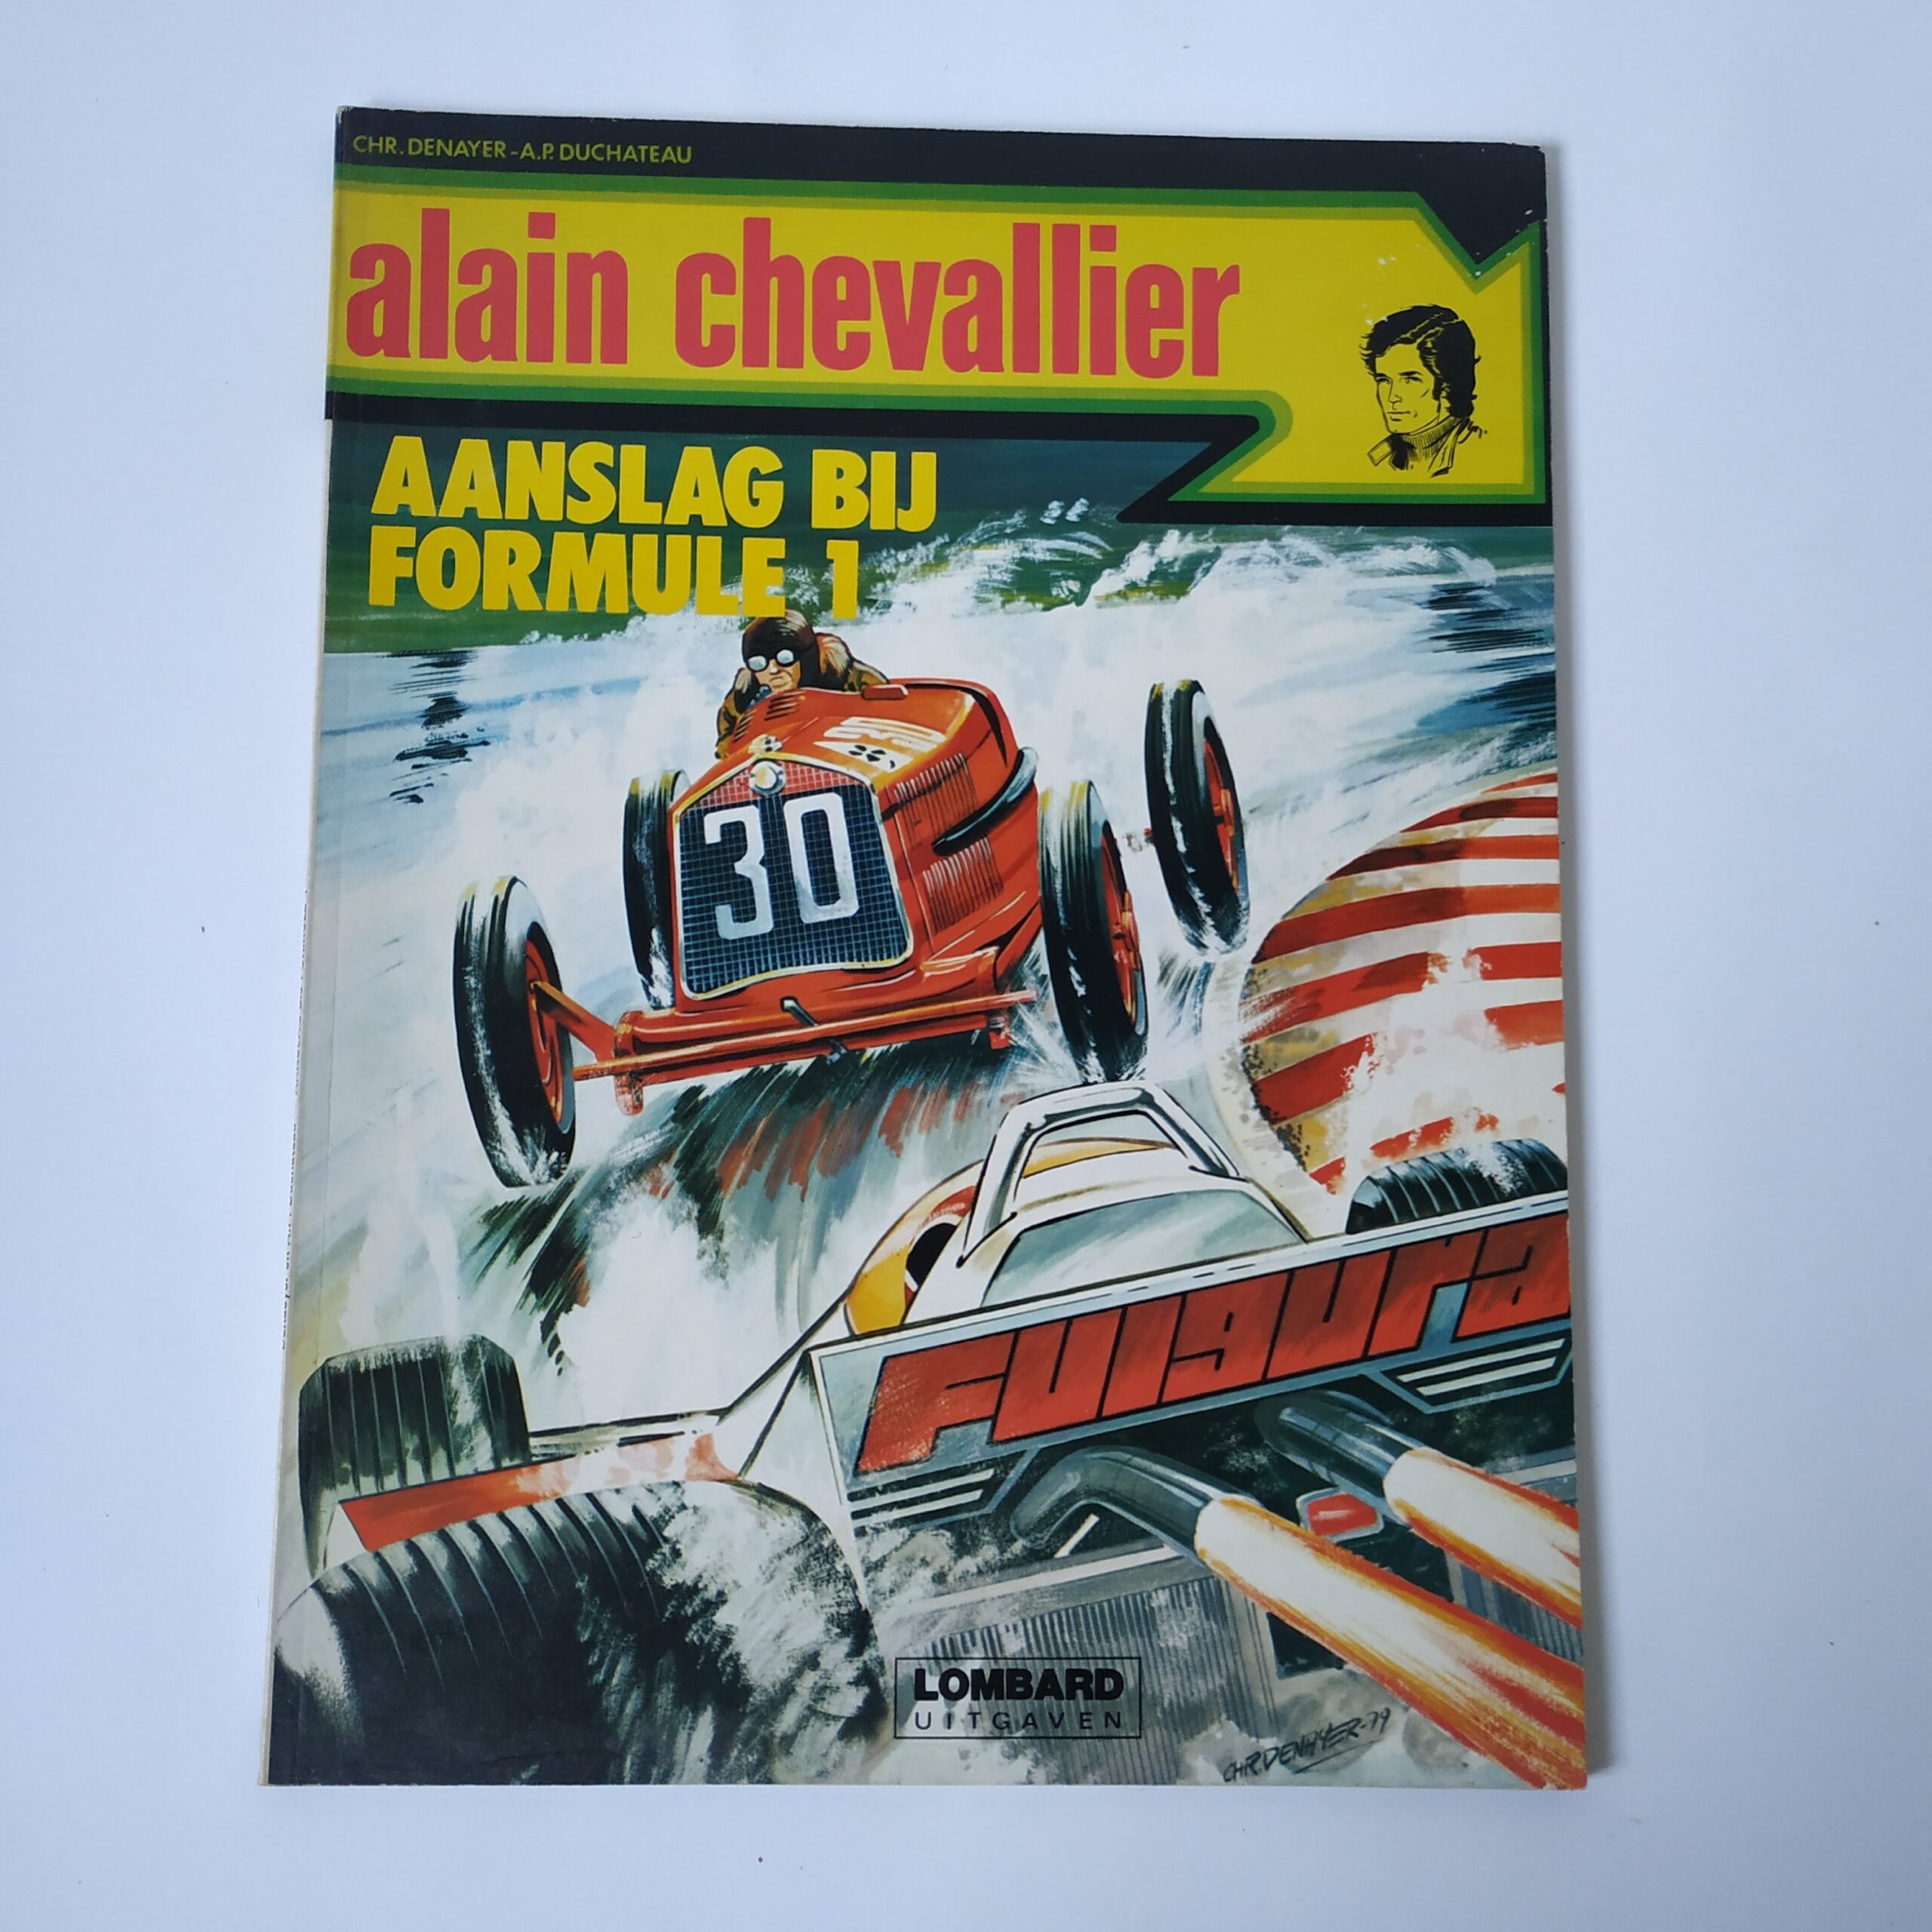 Stripboek Alain chevallier – aanslag bij formule 1 – 1980 (1)